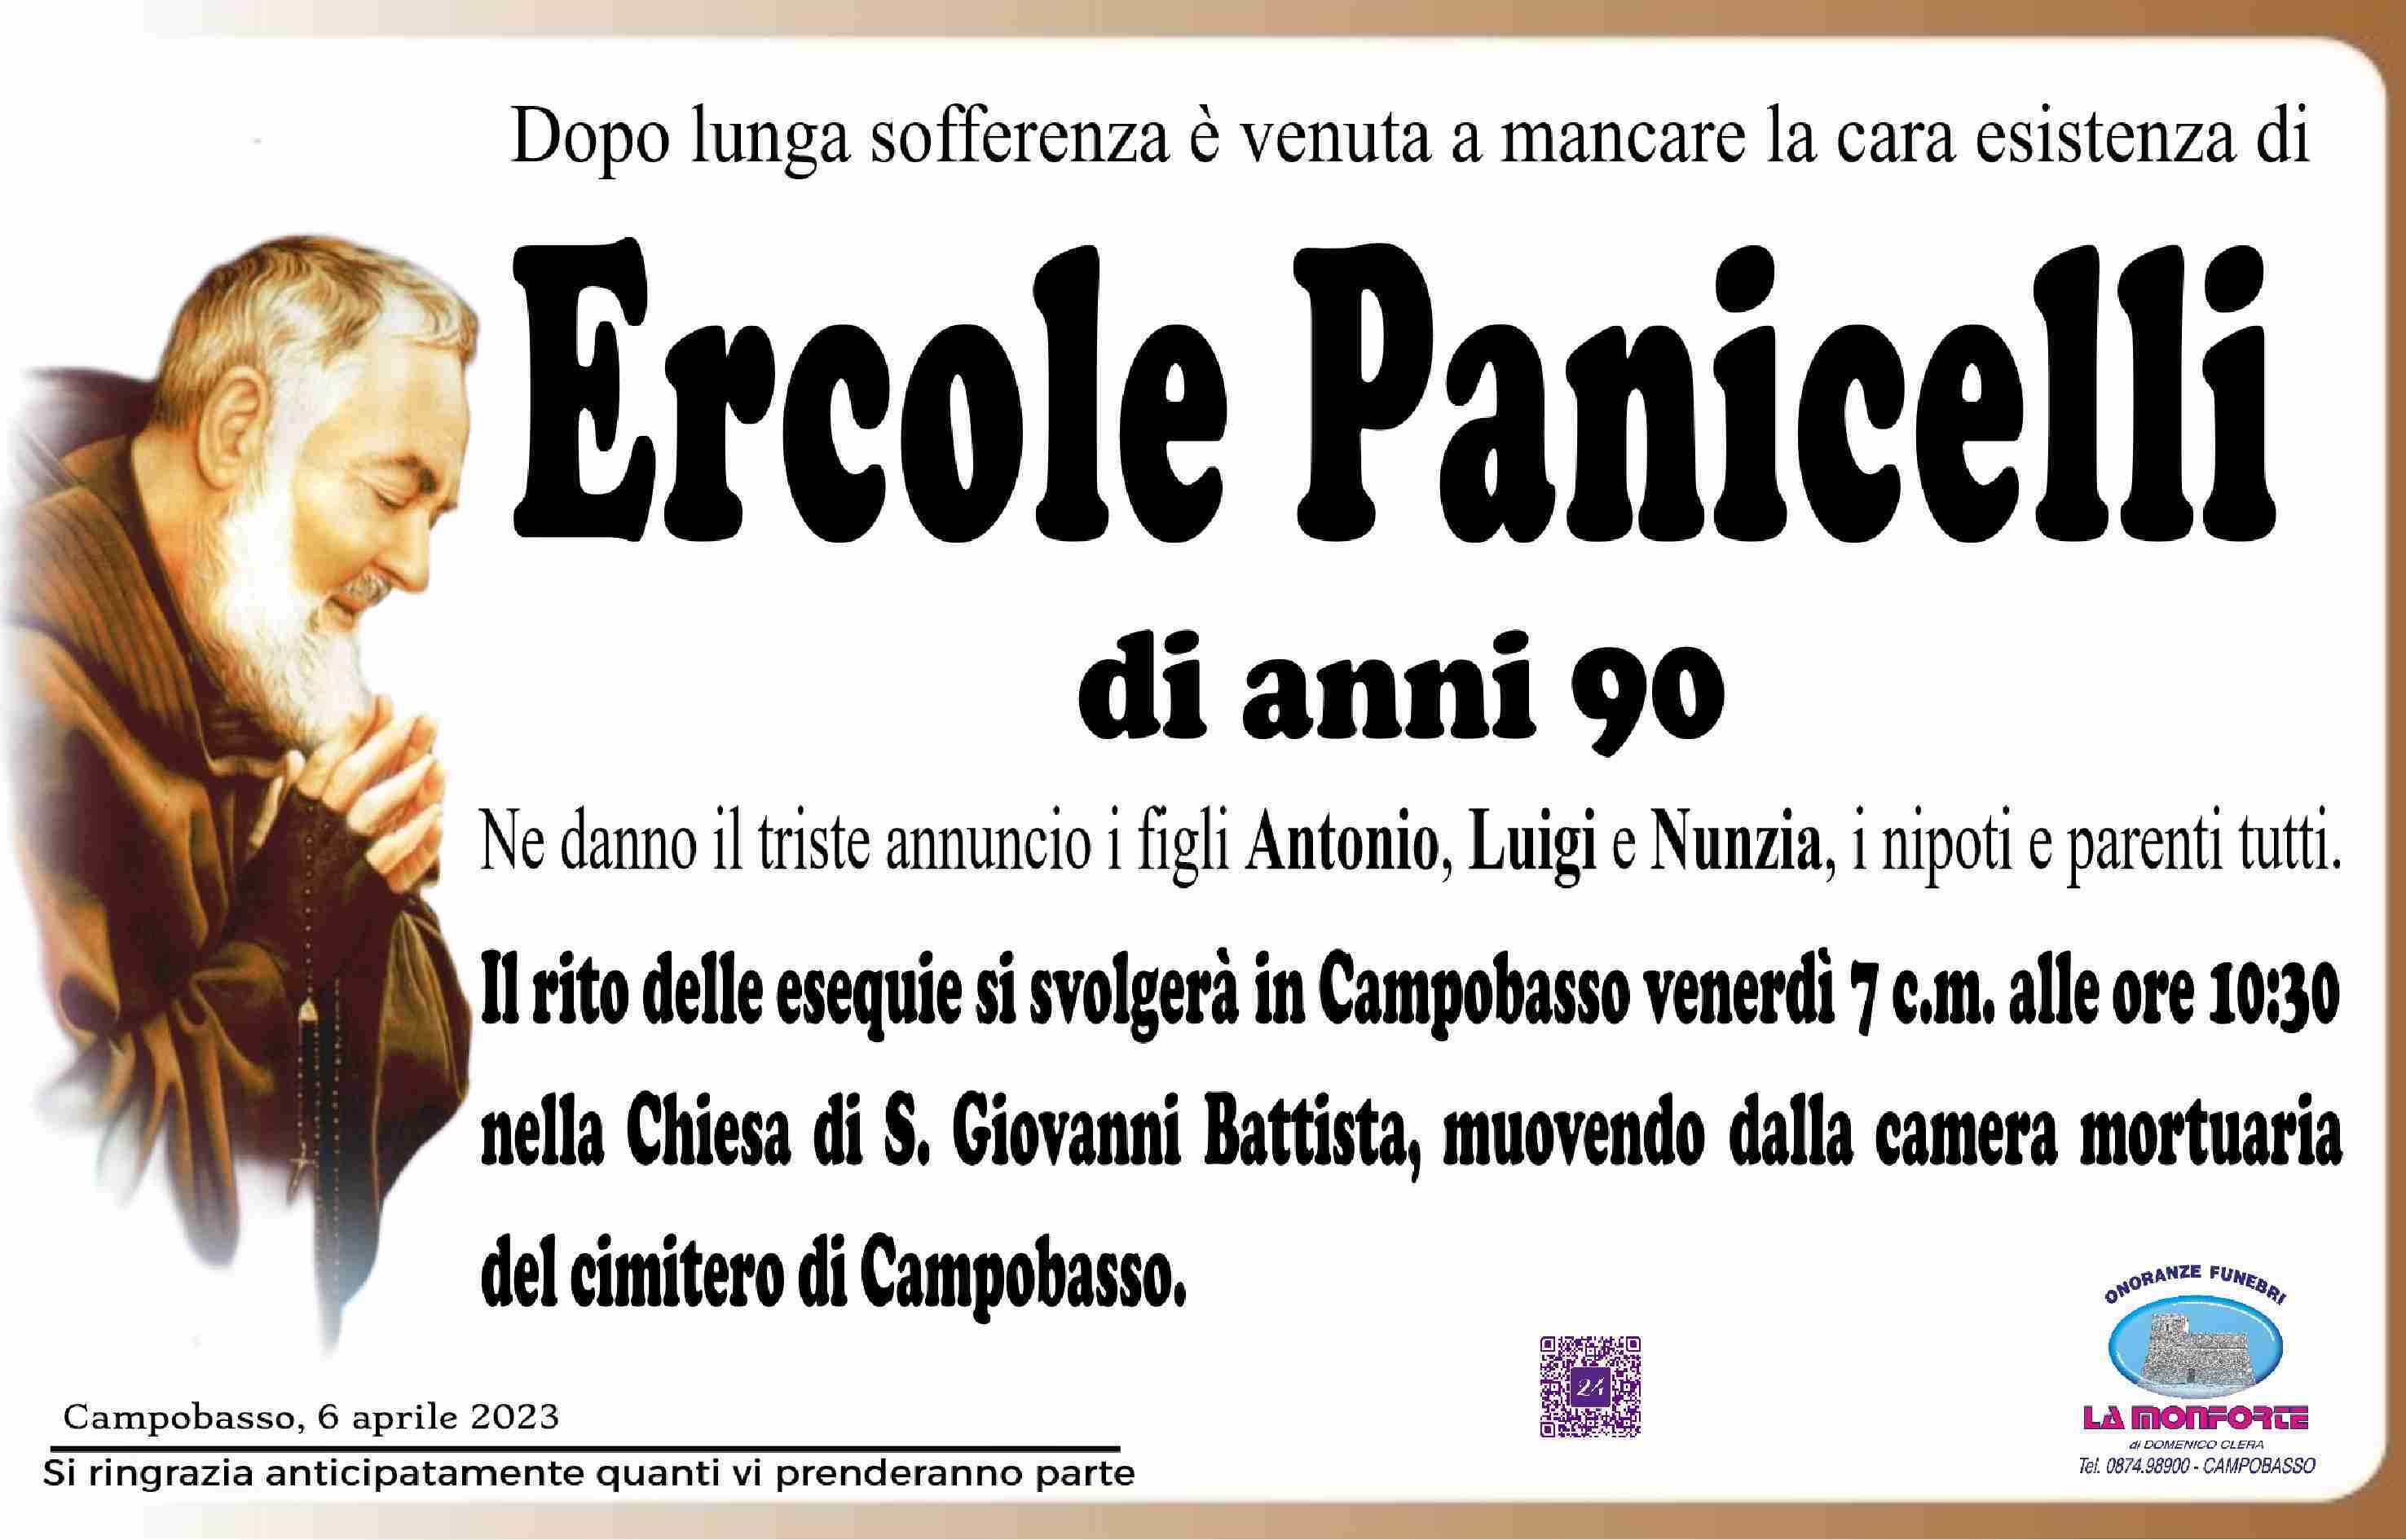 Ercole Panicelli